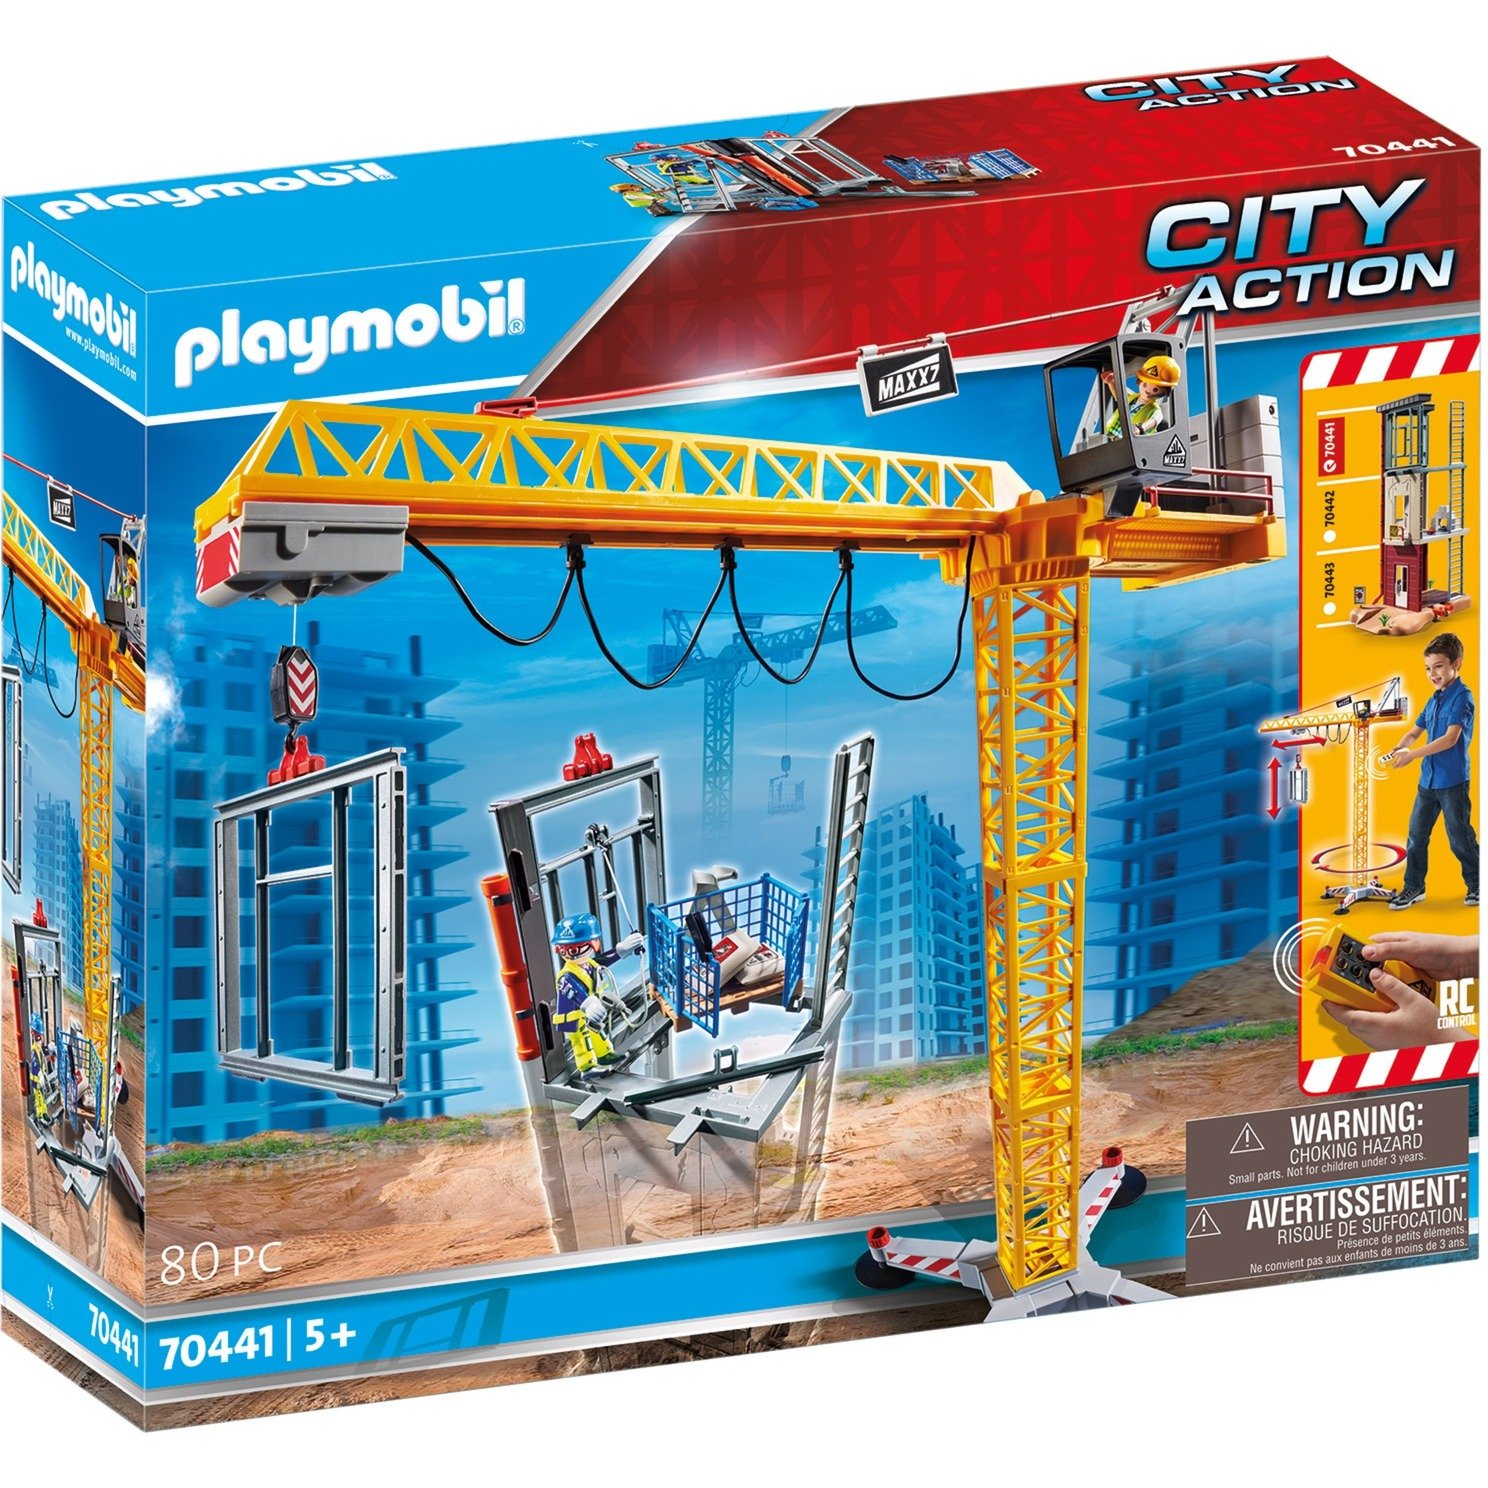 Spielzeug: PLAYMOBIL 70441 City Action - RC-Baukran mit Bauteil